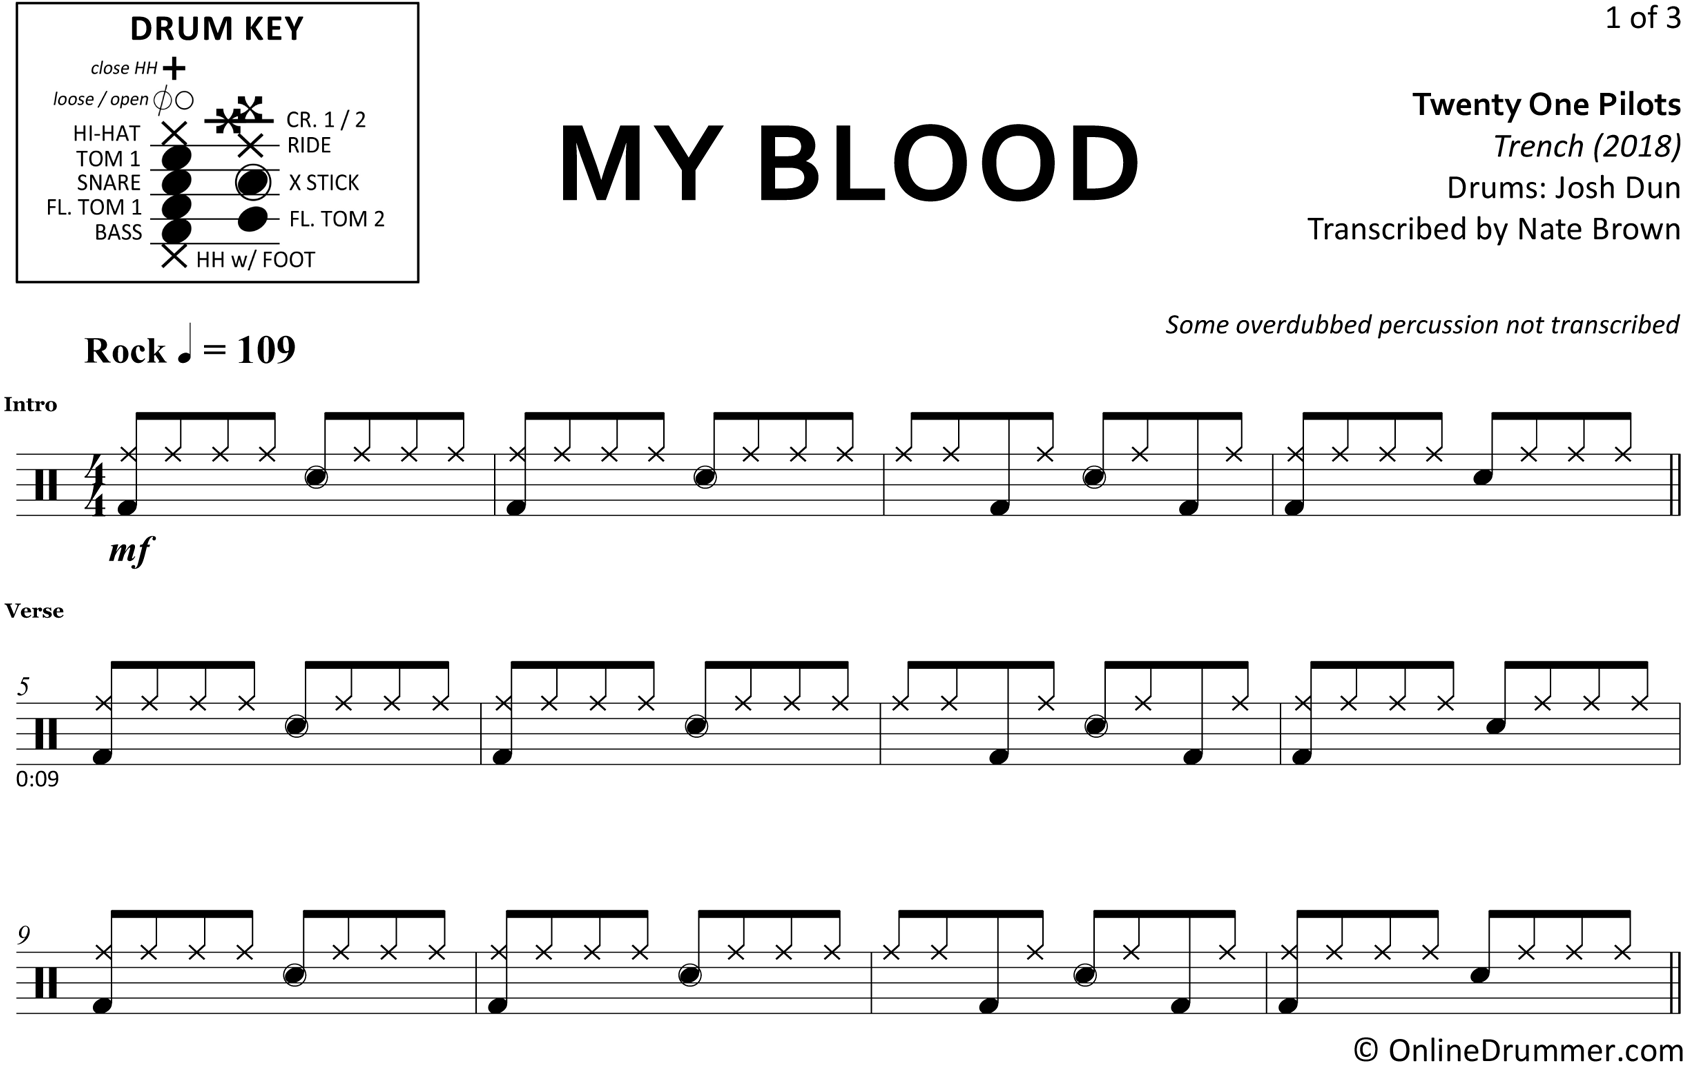 My Blood - Twenty One Pilots - Drum Sheet Music